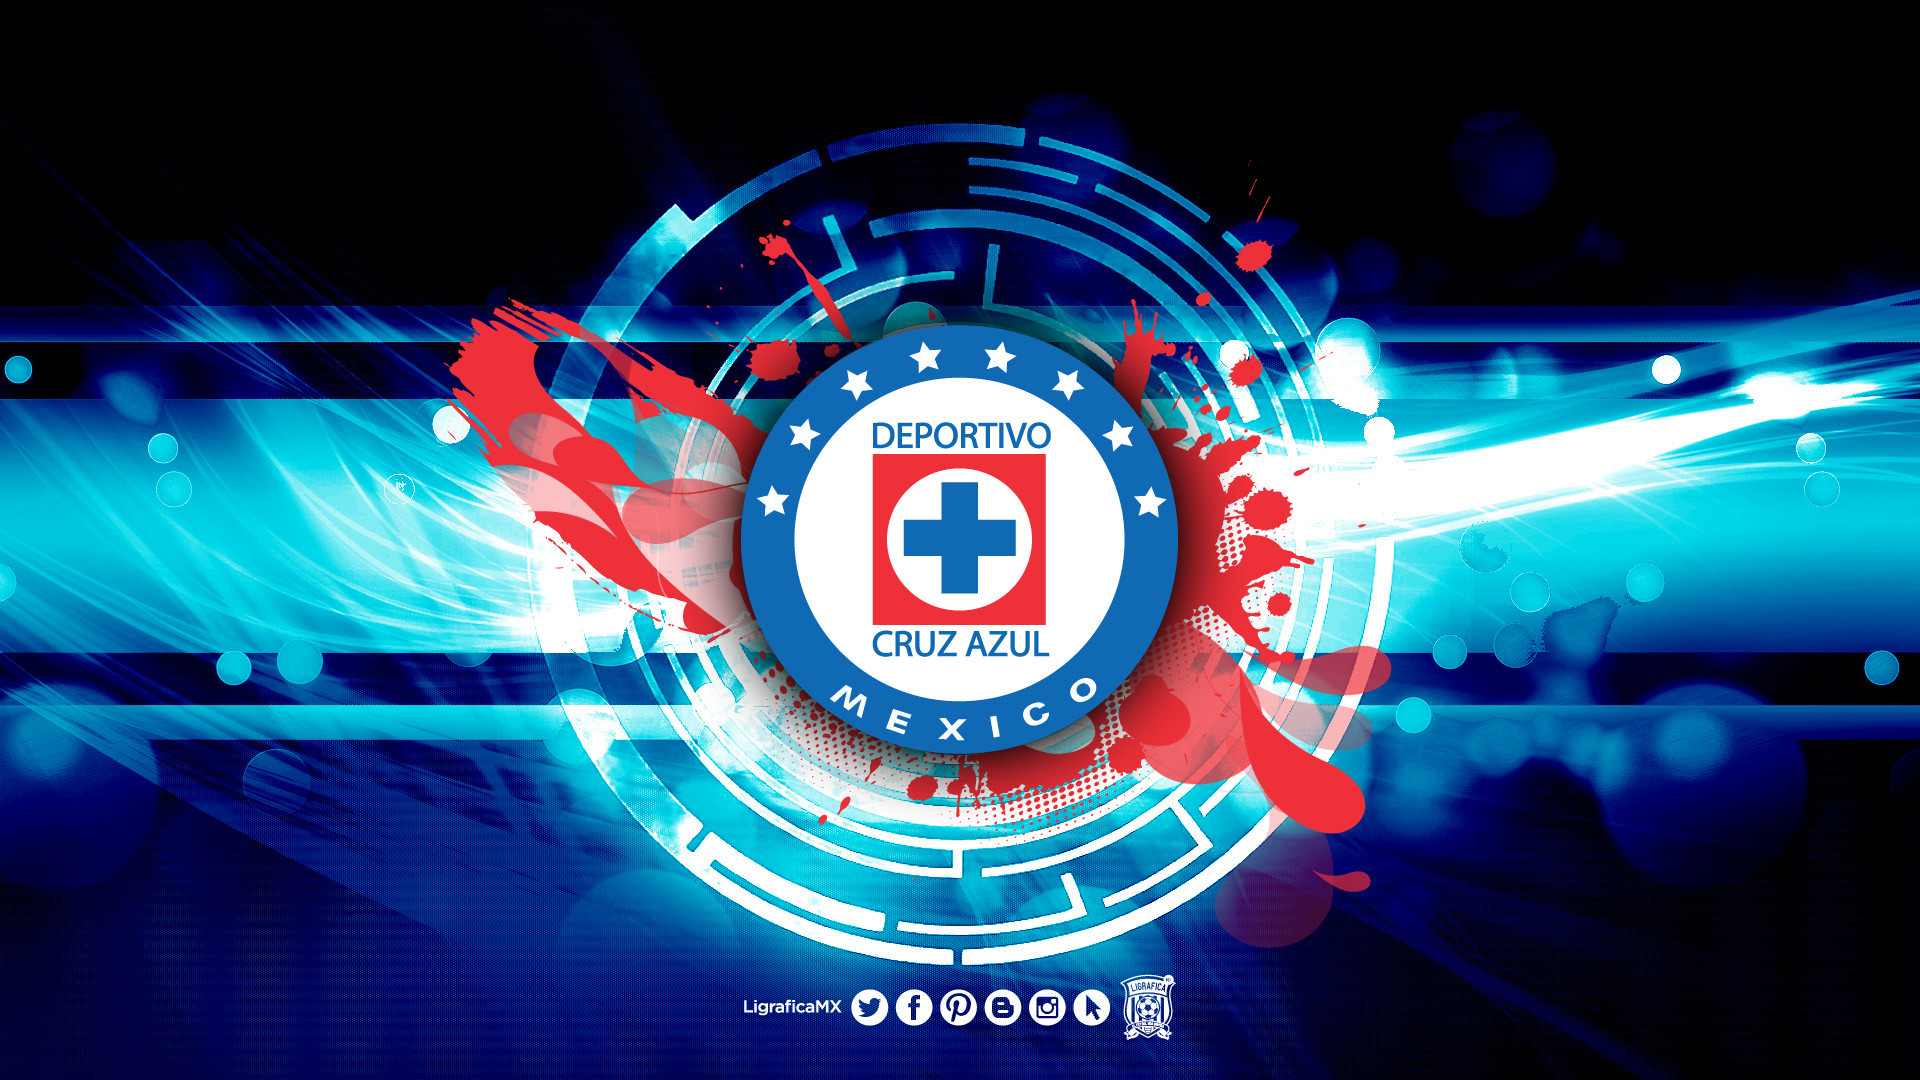 1920x1080 Cruz Azul • LigraficaMX 030314CTG(1) #ElFÃºtbolNosInspira